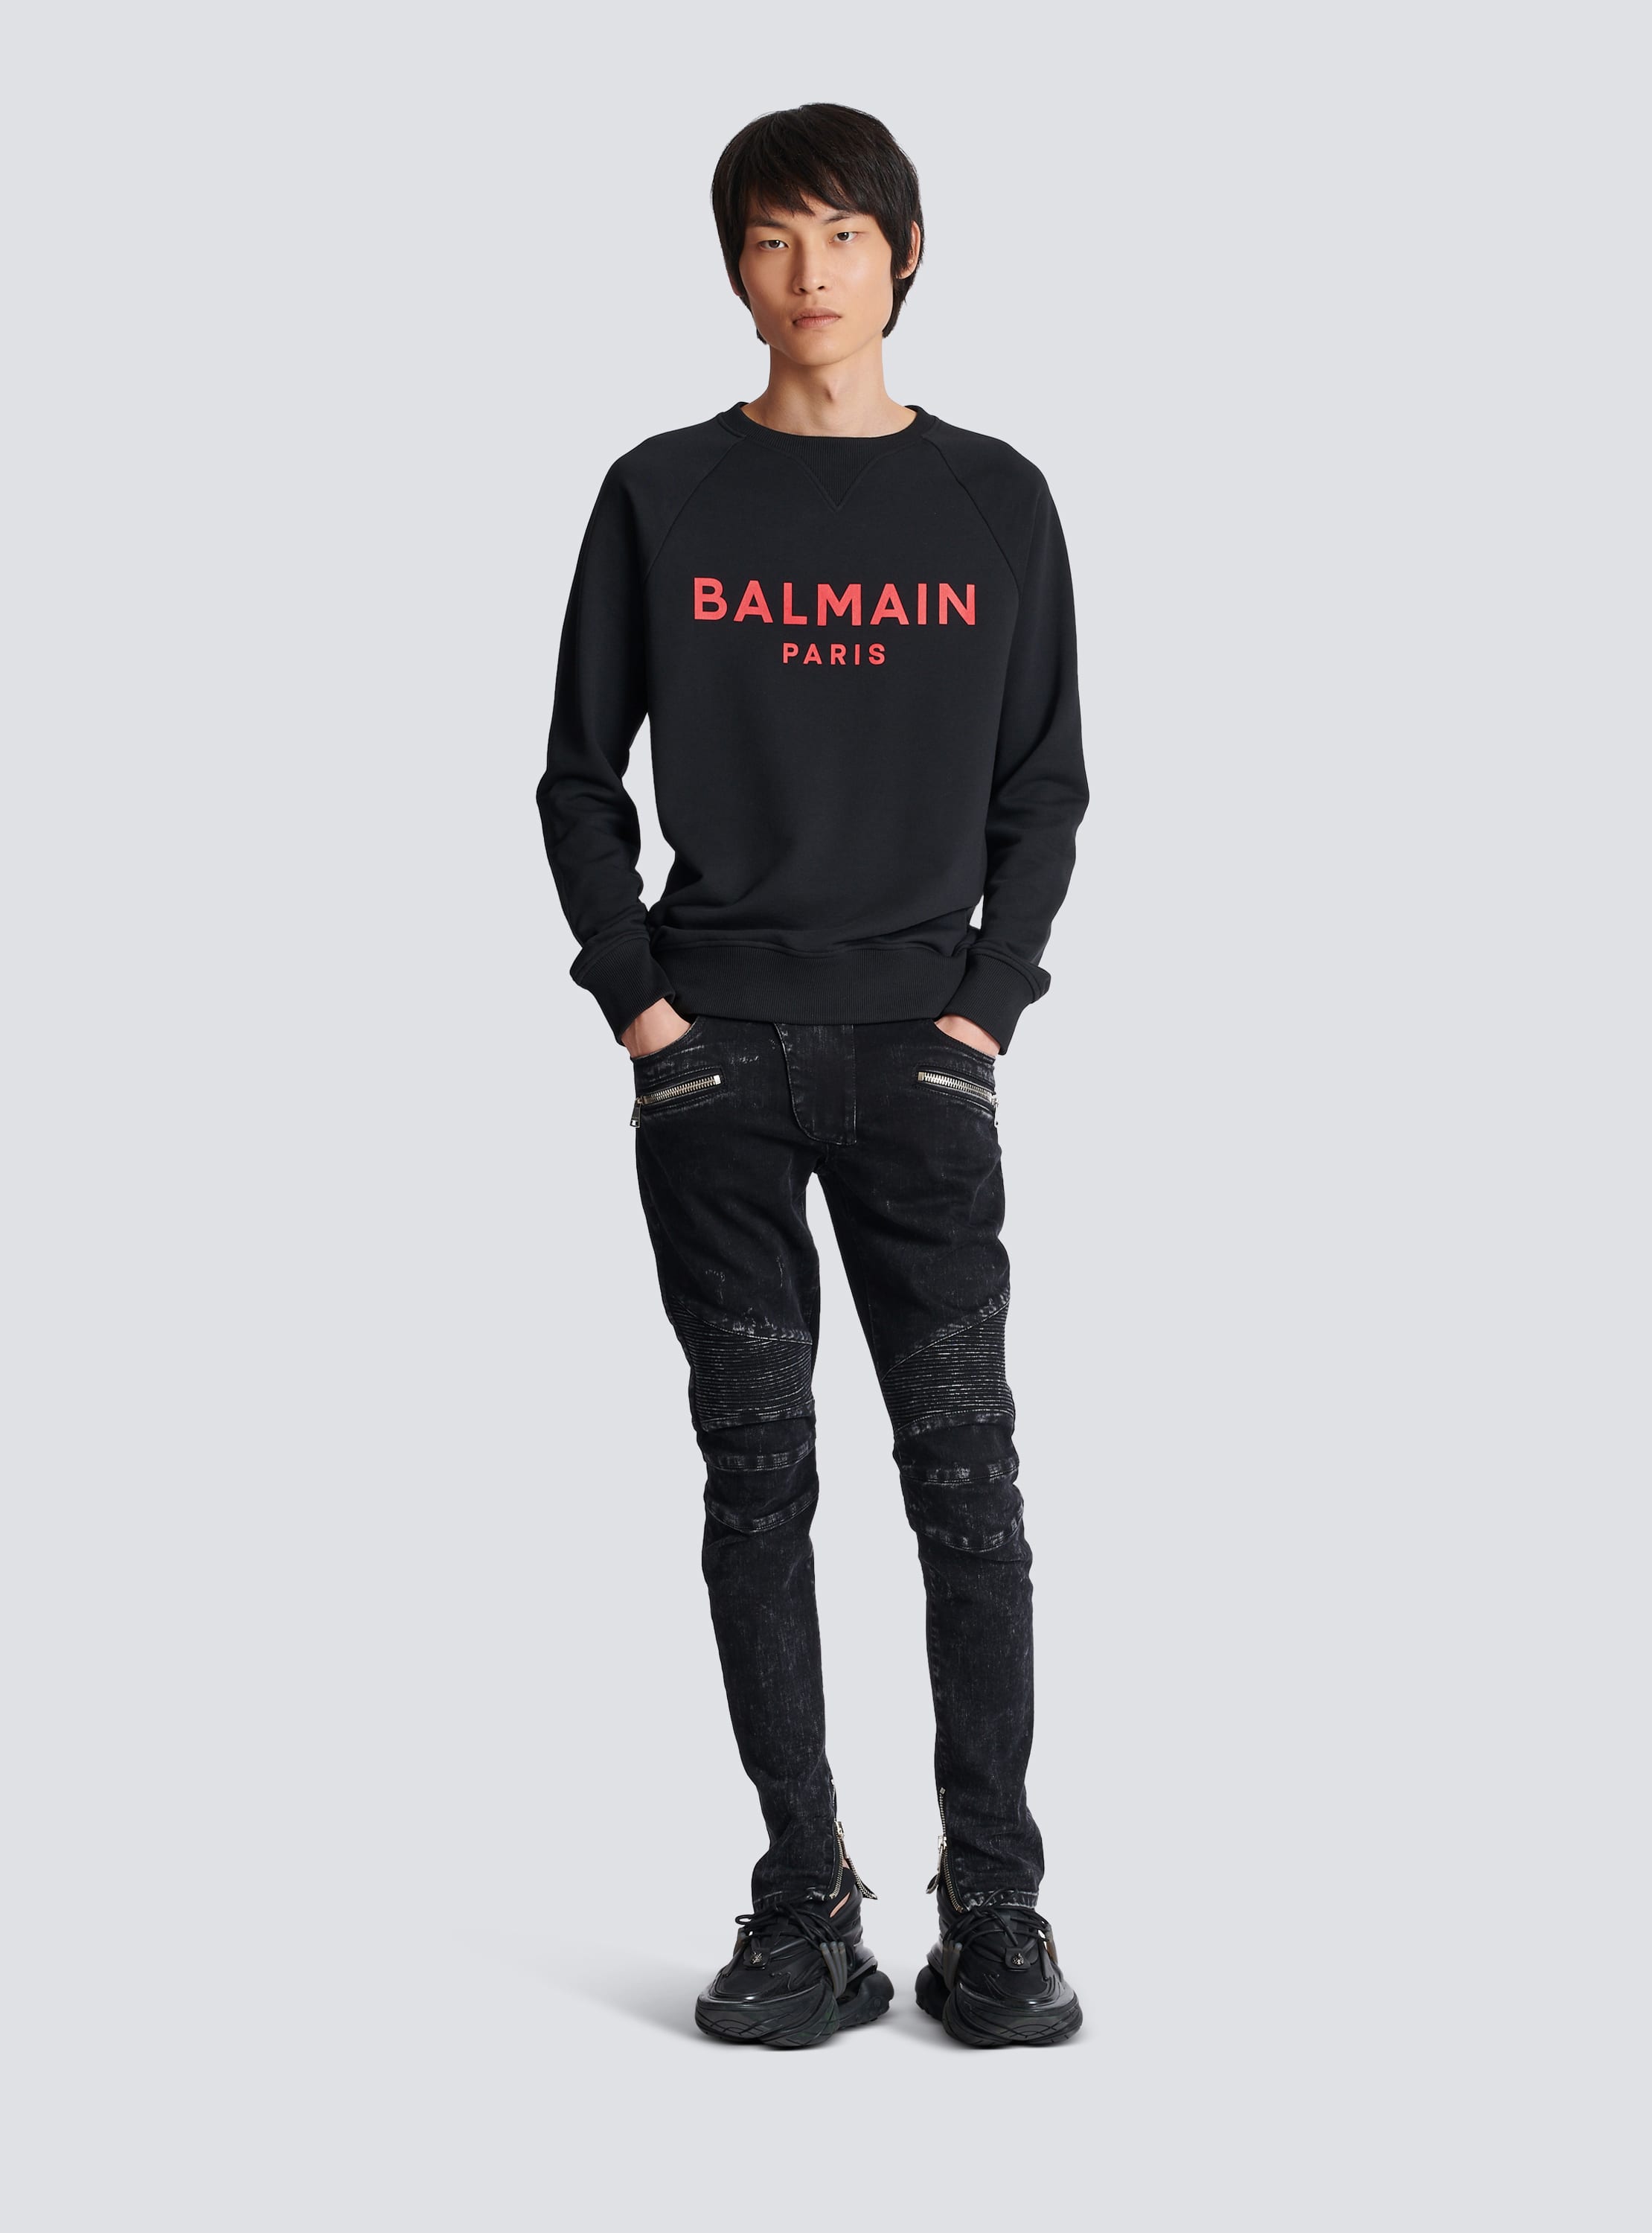 Sweatshirt mit Balmain Paris-Print 